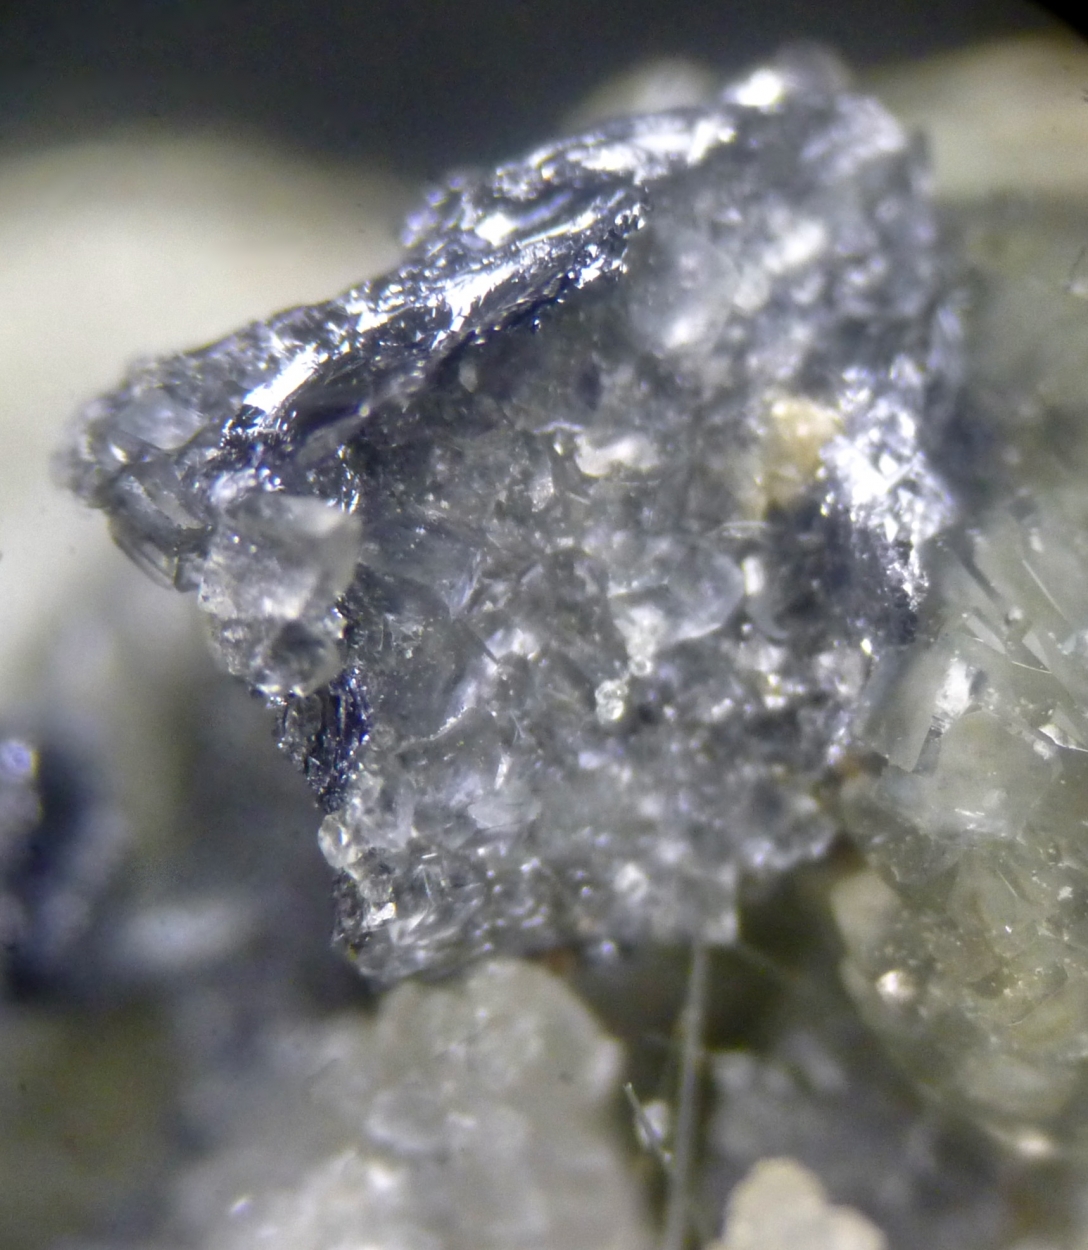 Tourmaline Molybdenite & Calcite